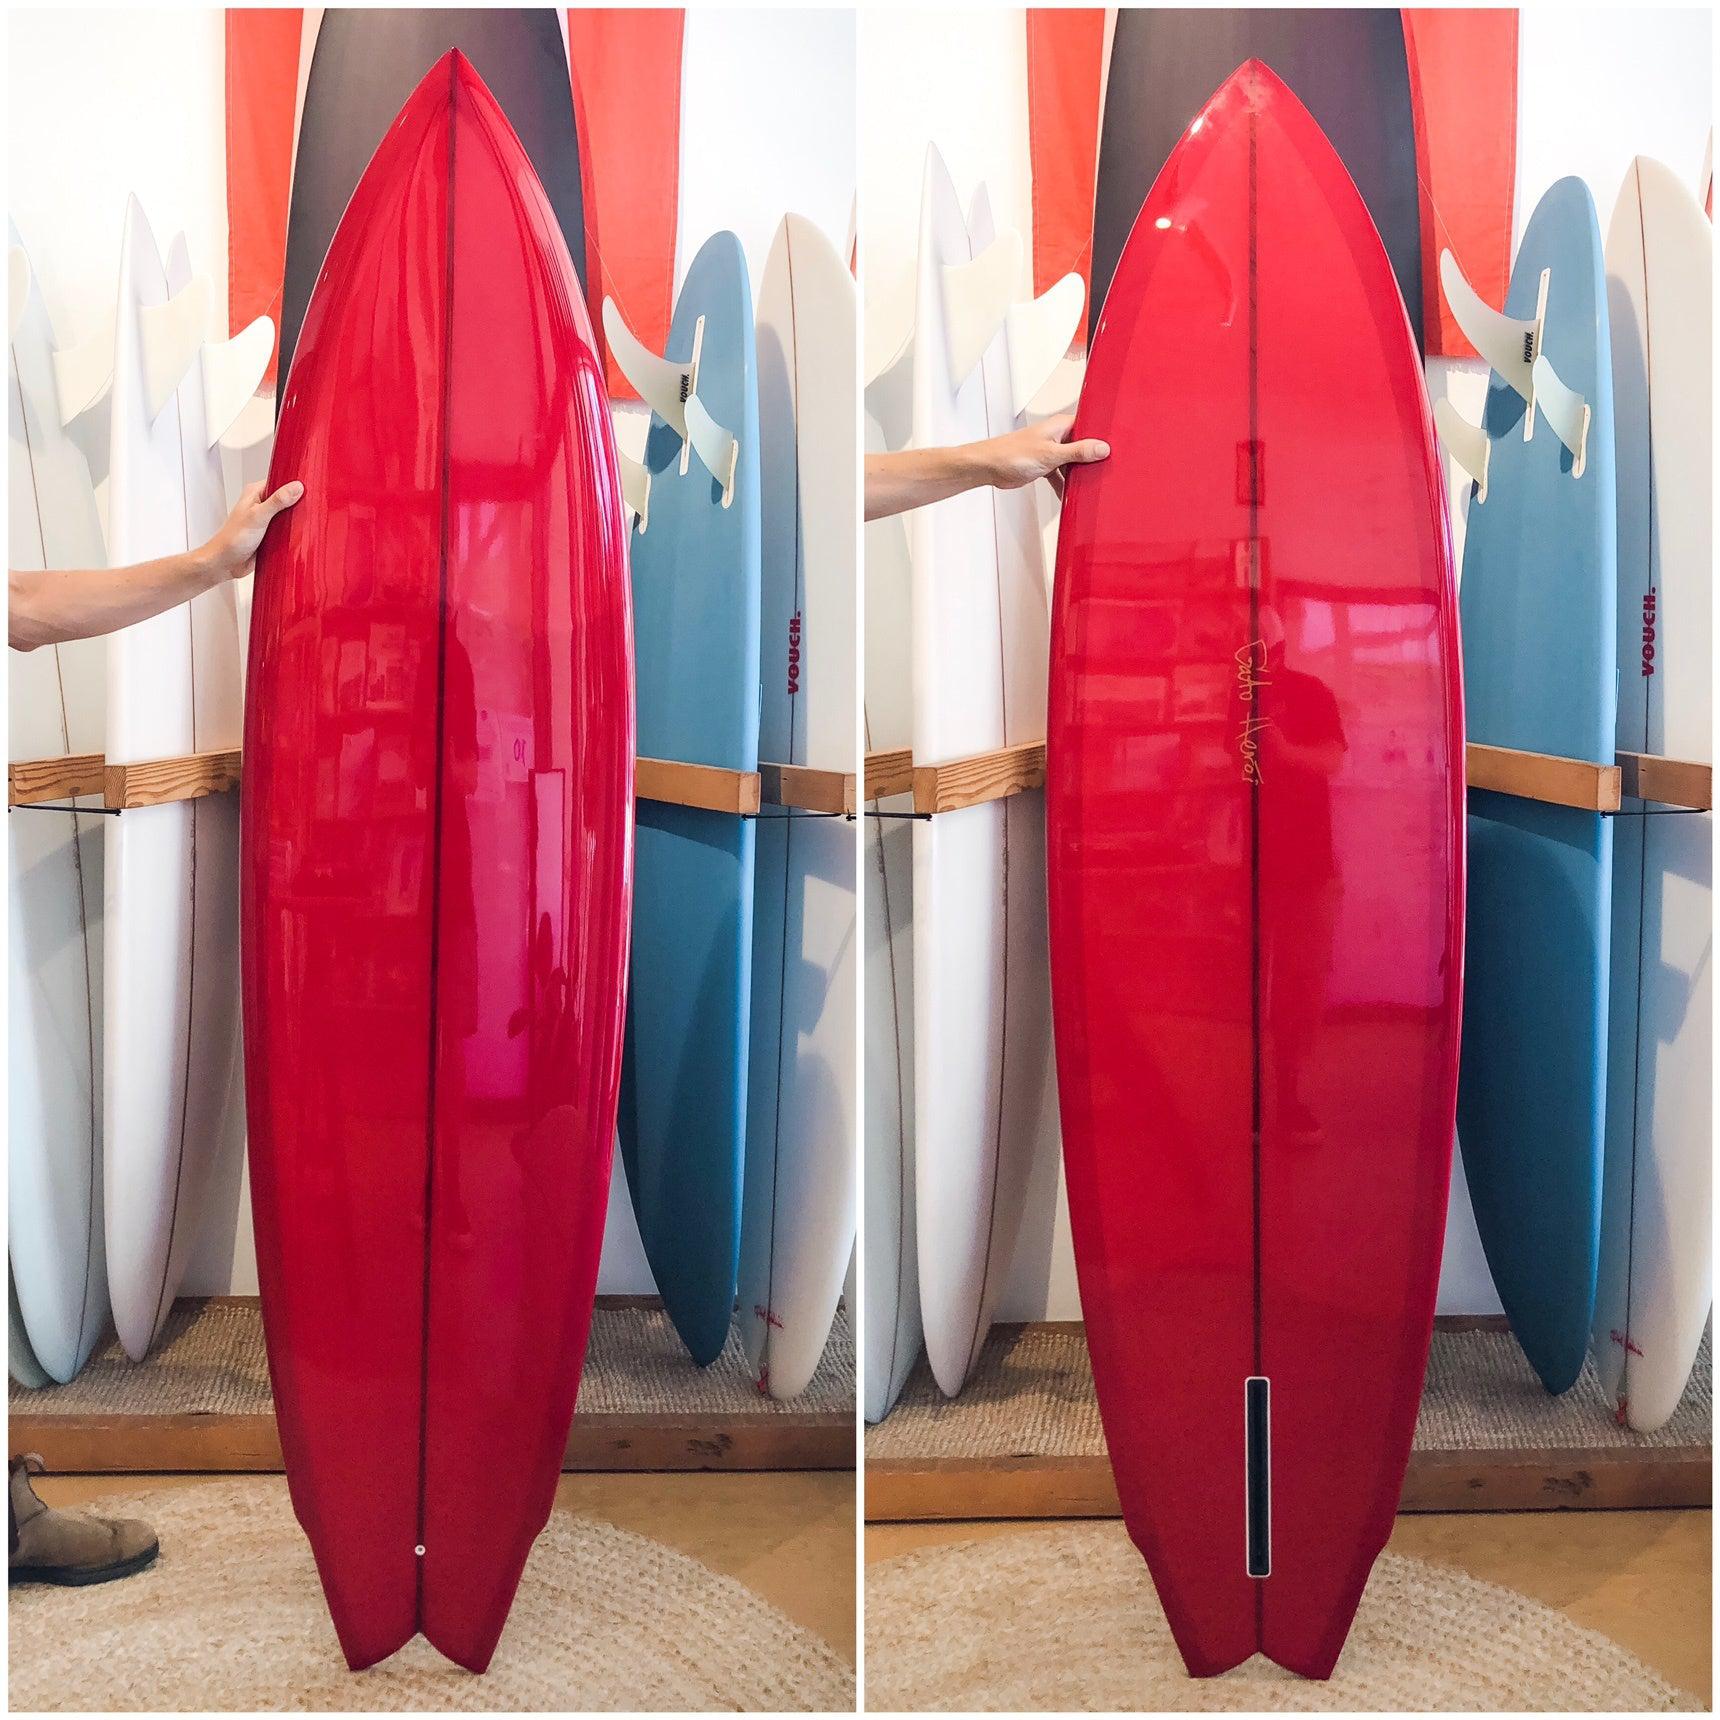 GATO HEROI 6'8" ANTI SINGLE-Keel Surf & Supply